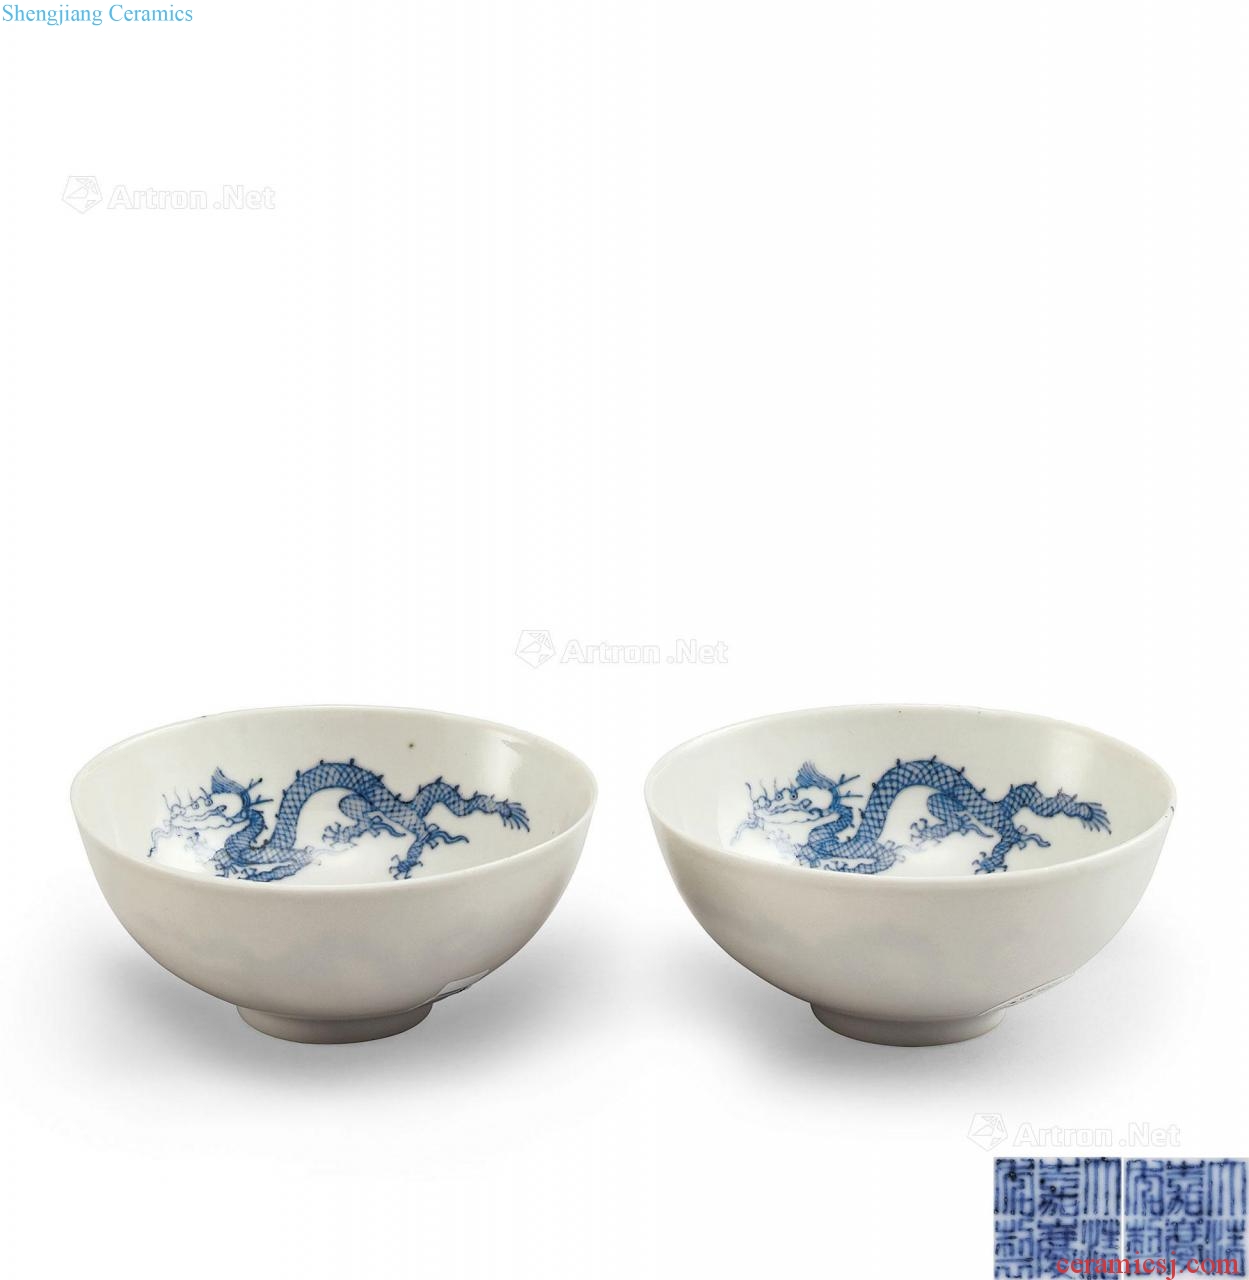 Qing jiaqing Blue and white dragon bowl (a)